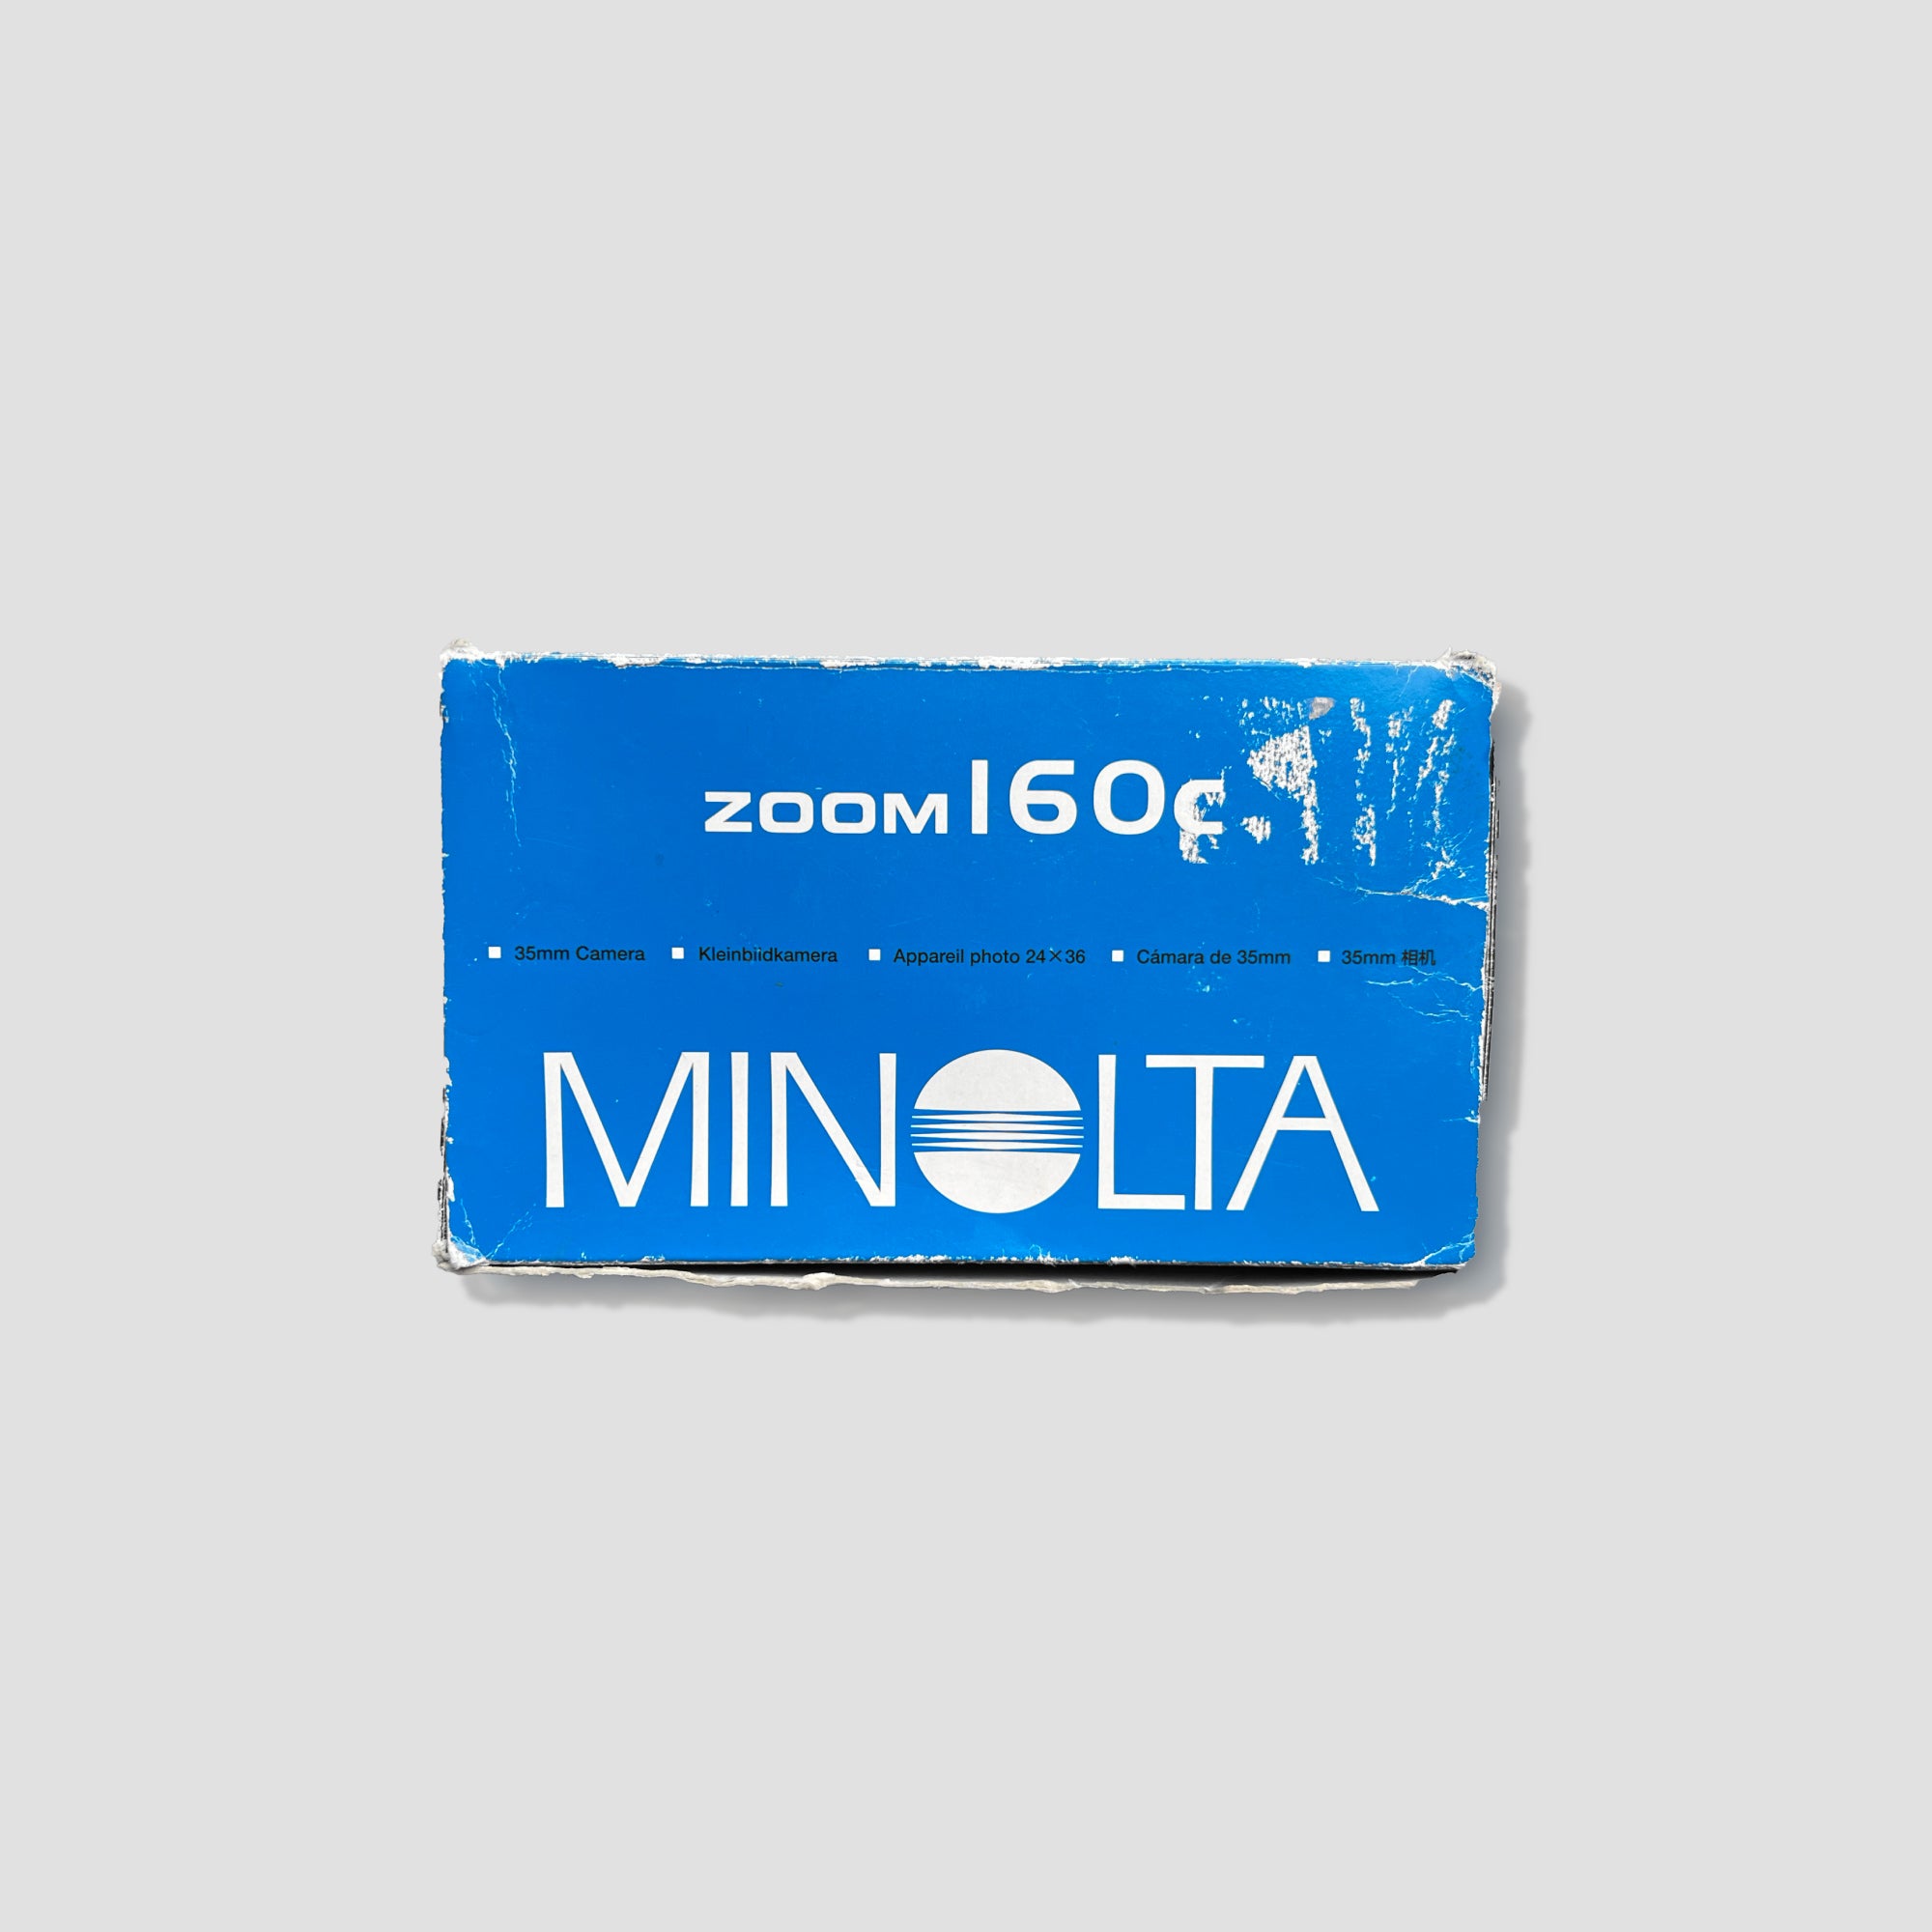 Minolta Zoom 160c